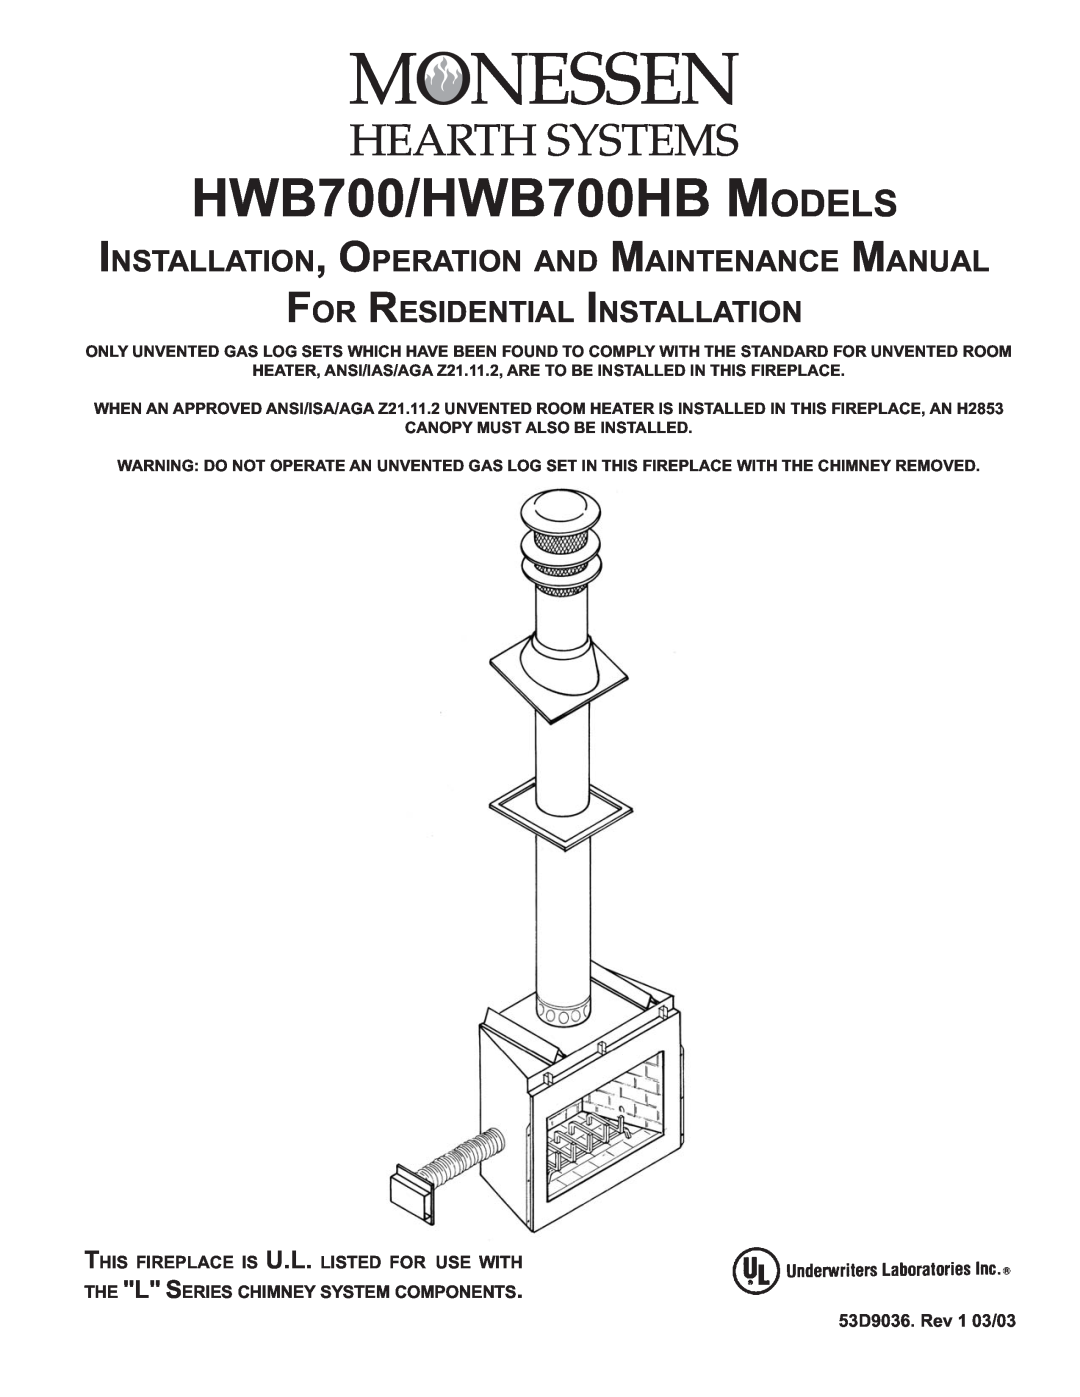 Monessen Hearth manual HWB700/HWB700HB MODELS, Installation, Operation And Maintenance Manual 